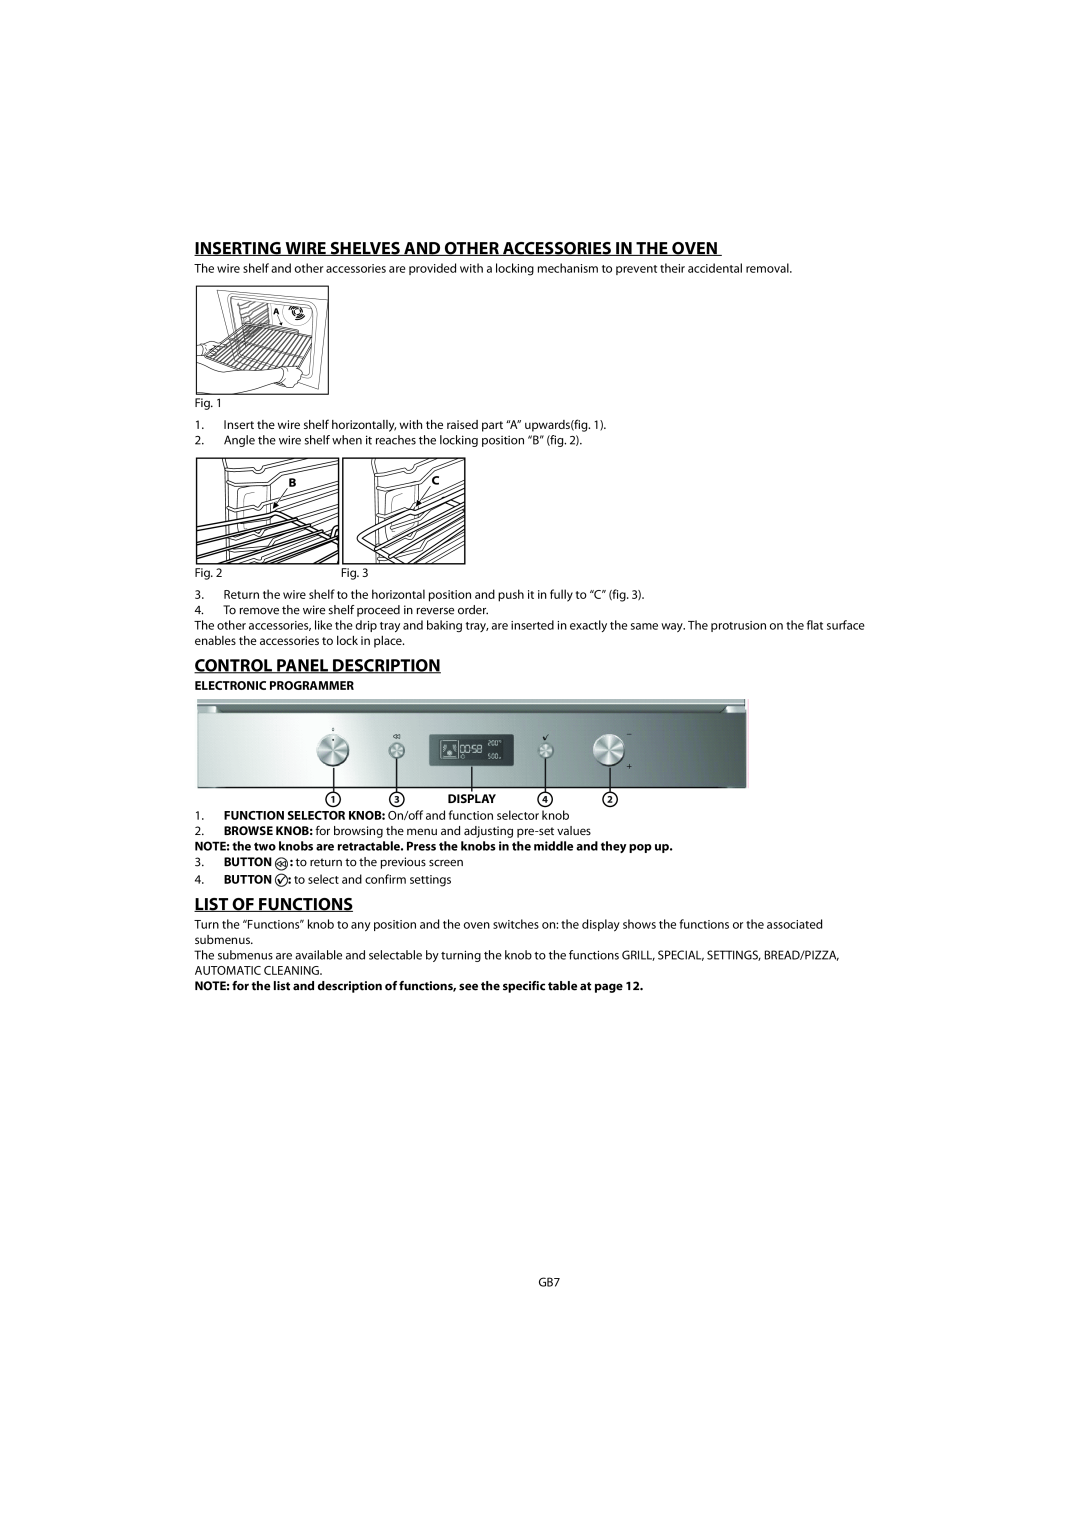 Whirlpool AKZM 755 manuel dutilisation Control Panel Description, List Of Functions, Electronic Programmer, Display 